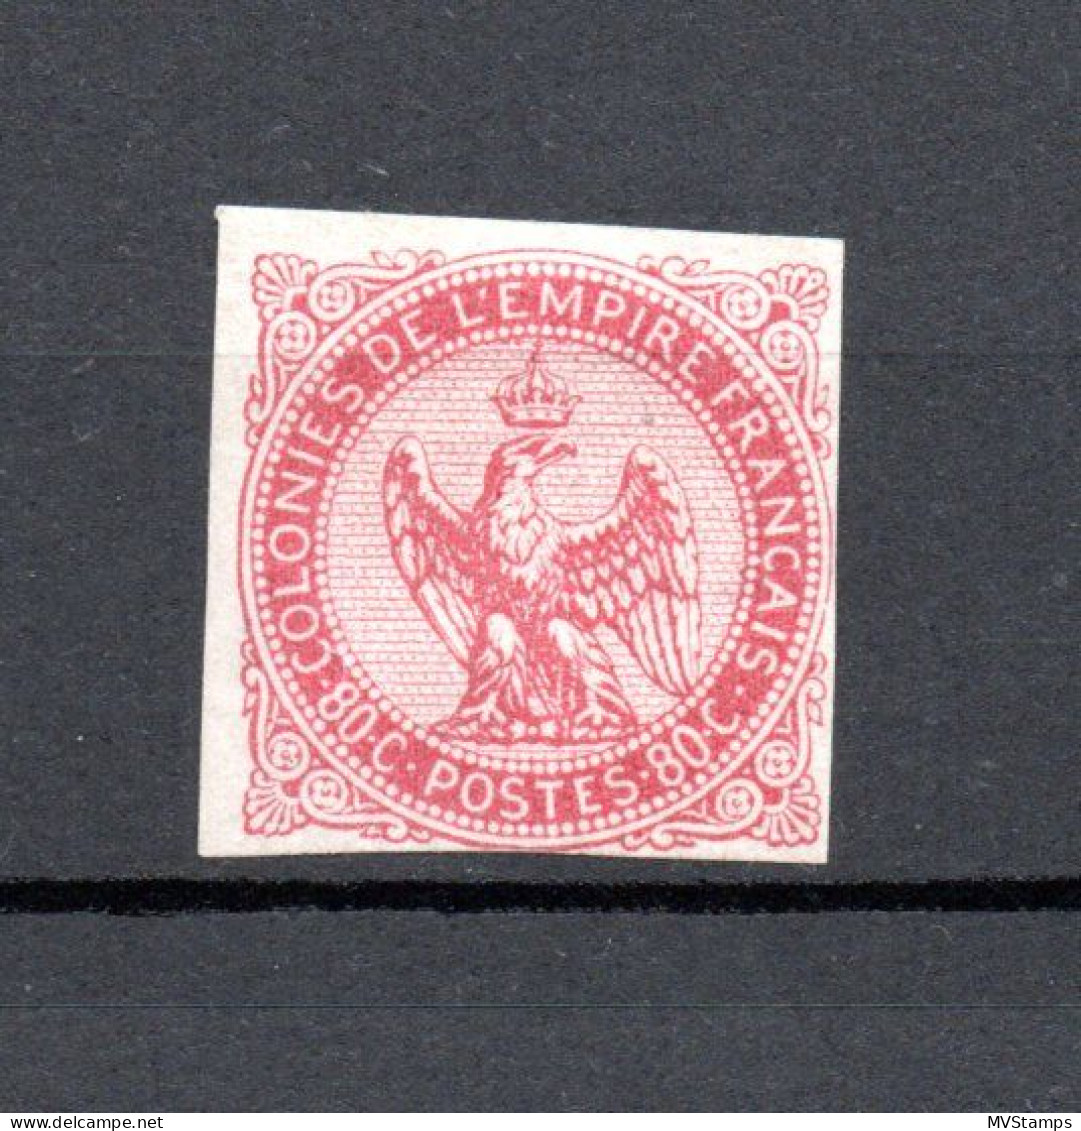 France Colonies 1865 Old Eagle Stamp (Michel 6) Nice Unused/no Gum - Eagle And Crown